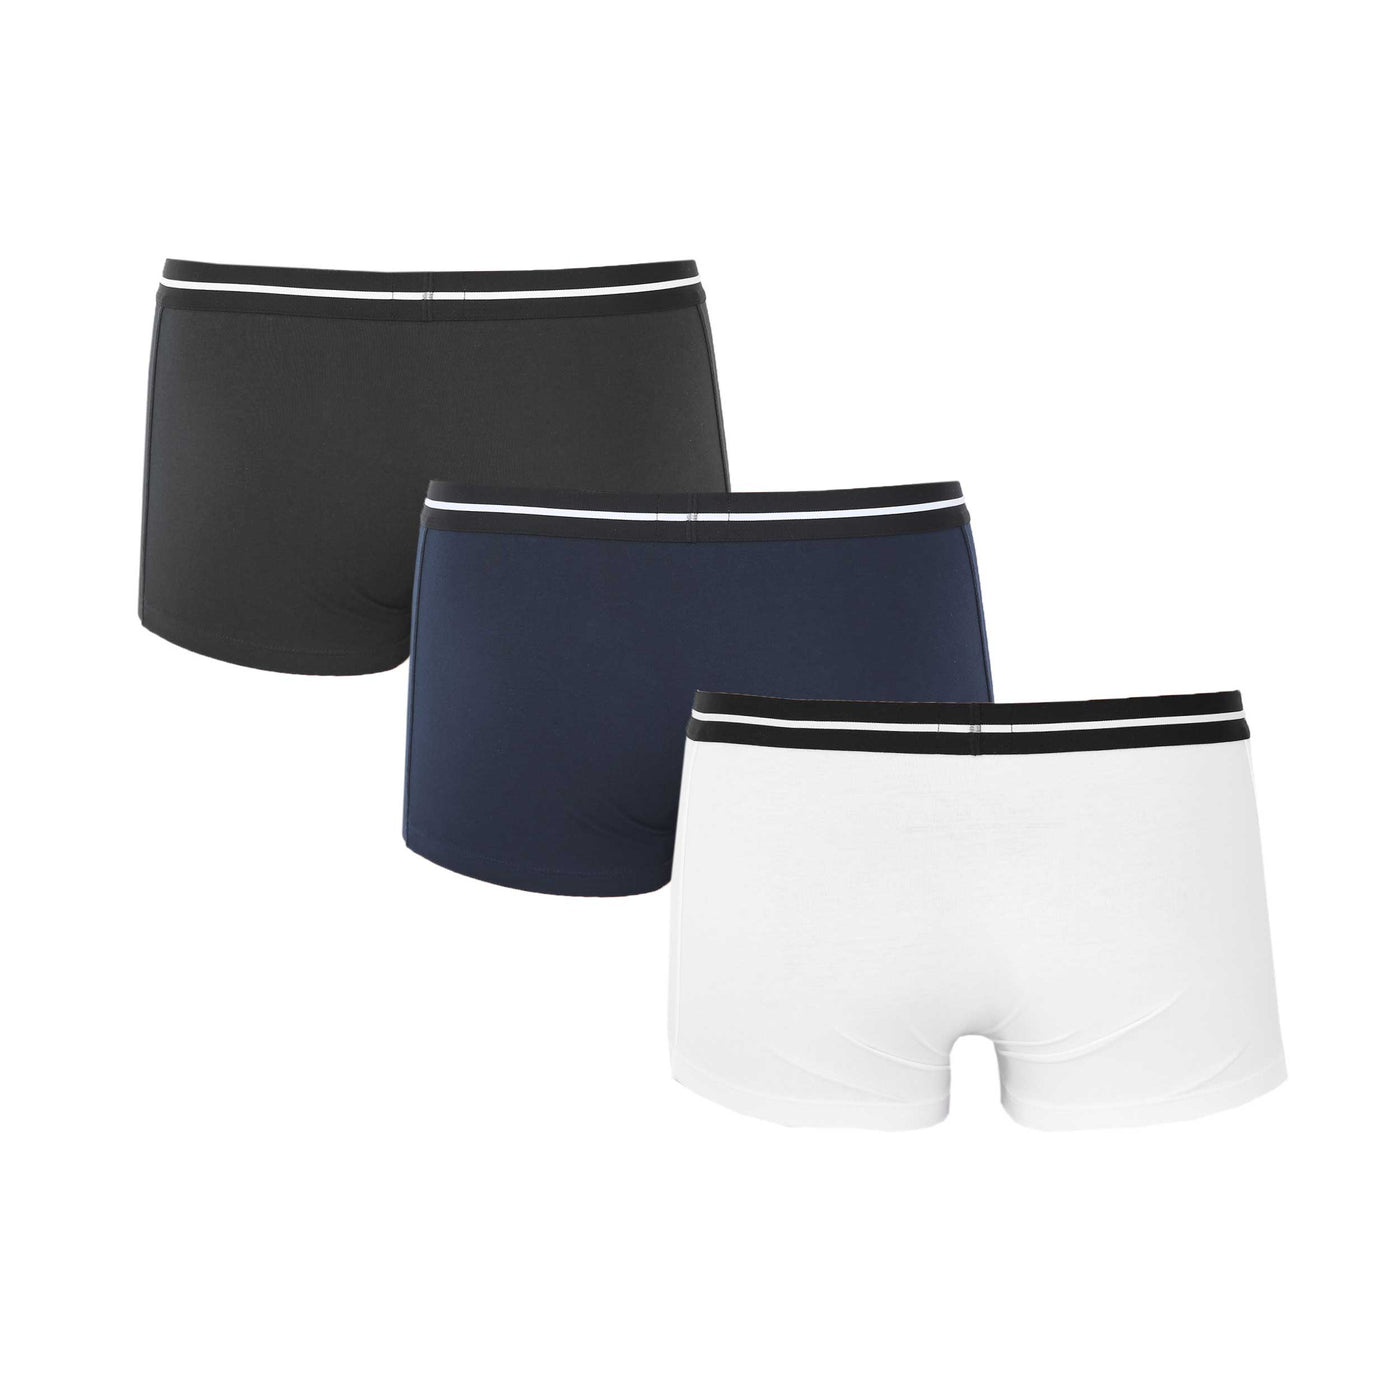 BOSS Trunk 3P Bold Underwear in Black, Navy & White Back